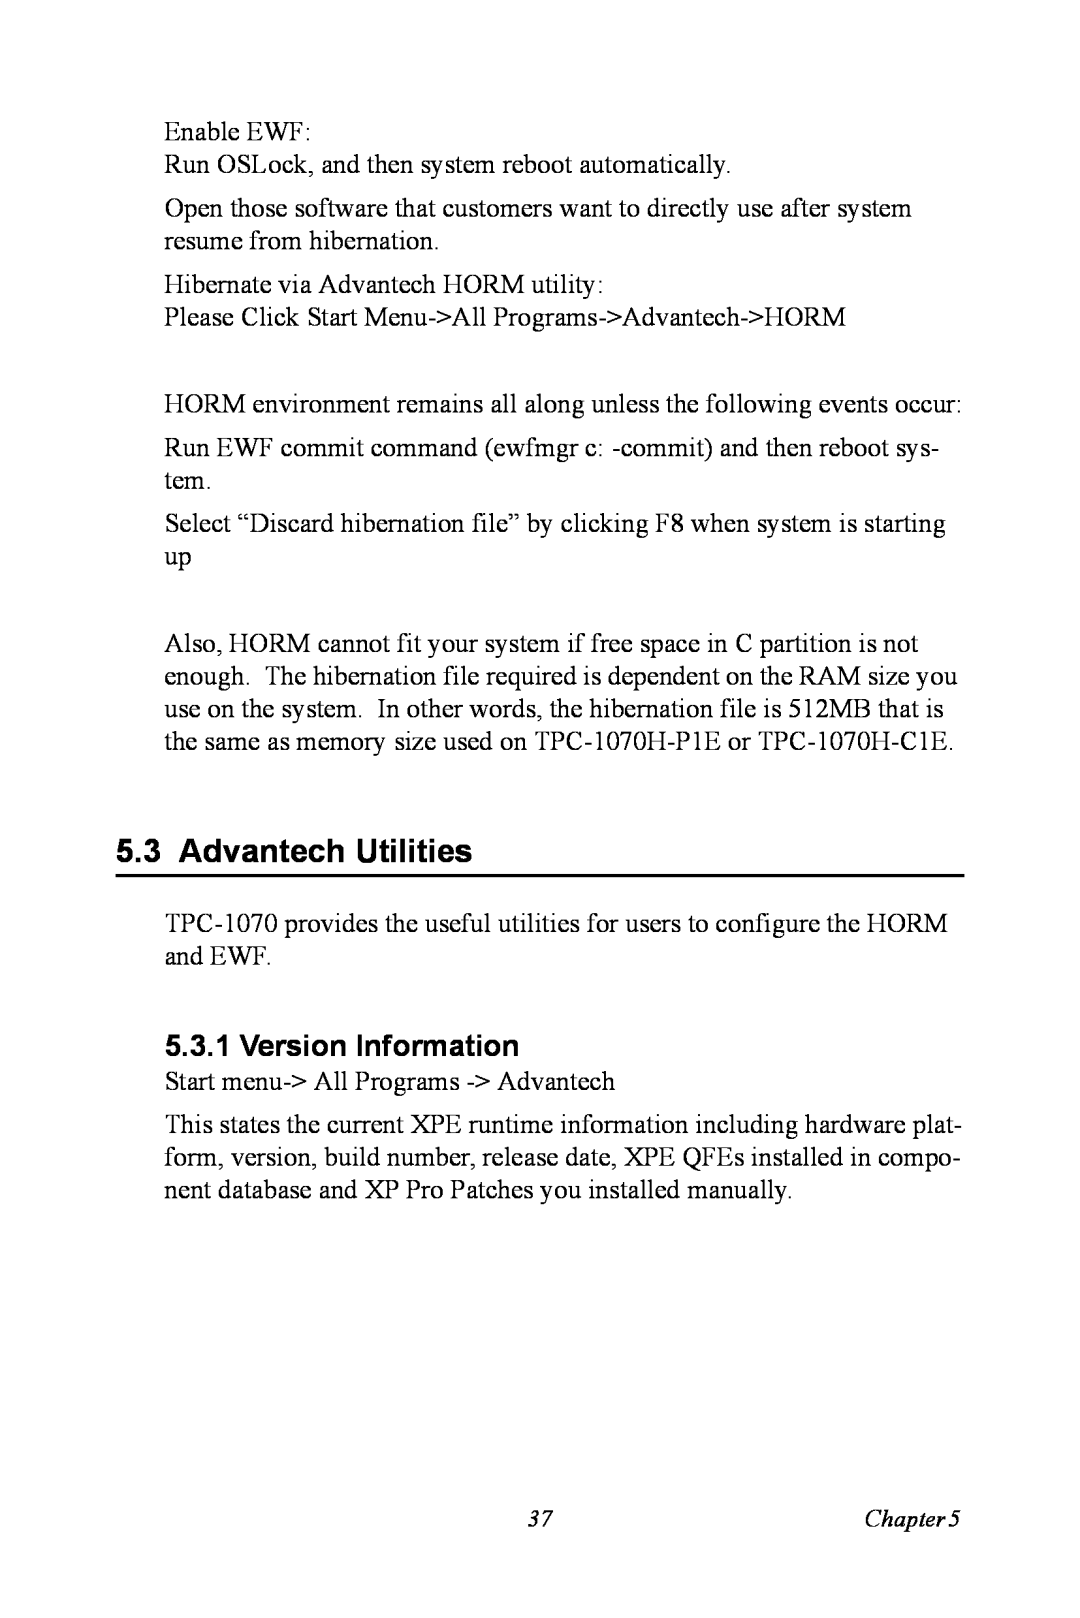 Intel TPC-1070 user manual Advantech Utilities, Version Information 